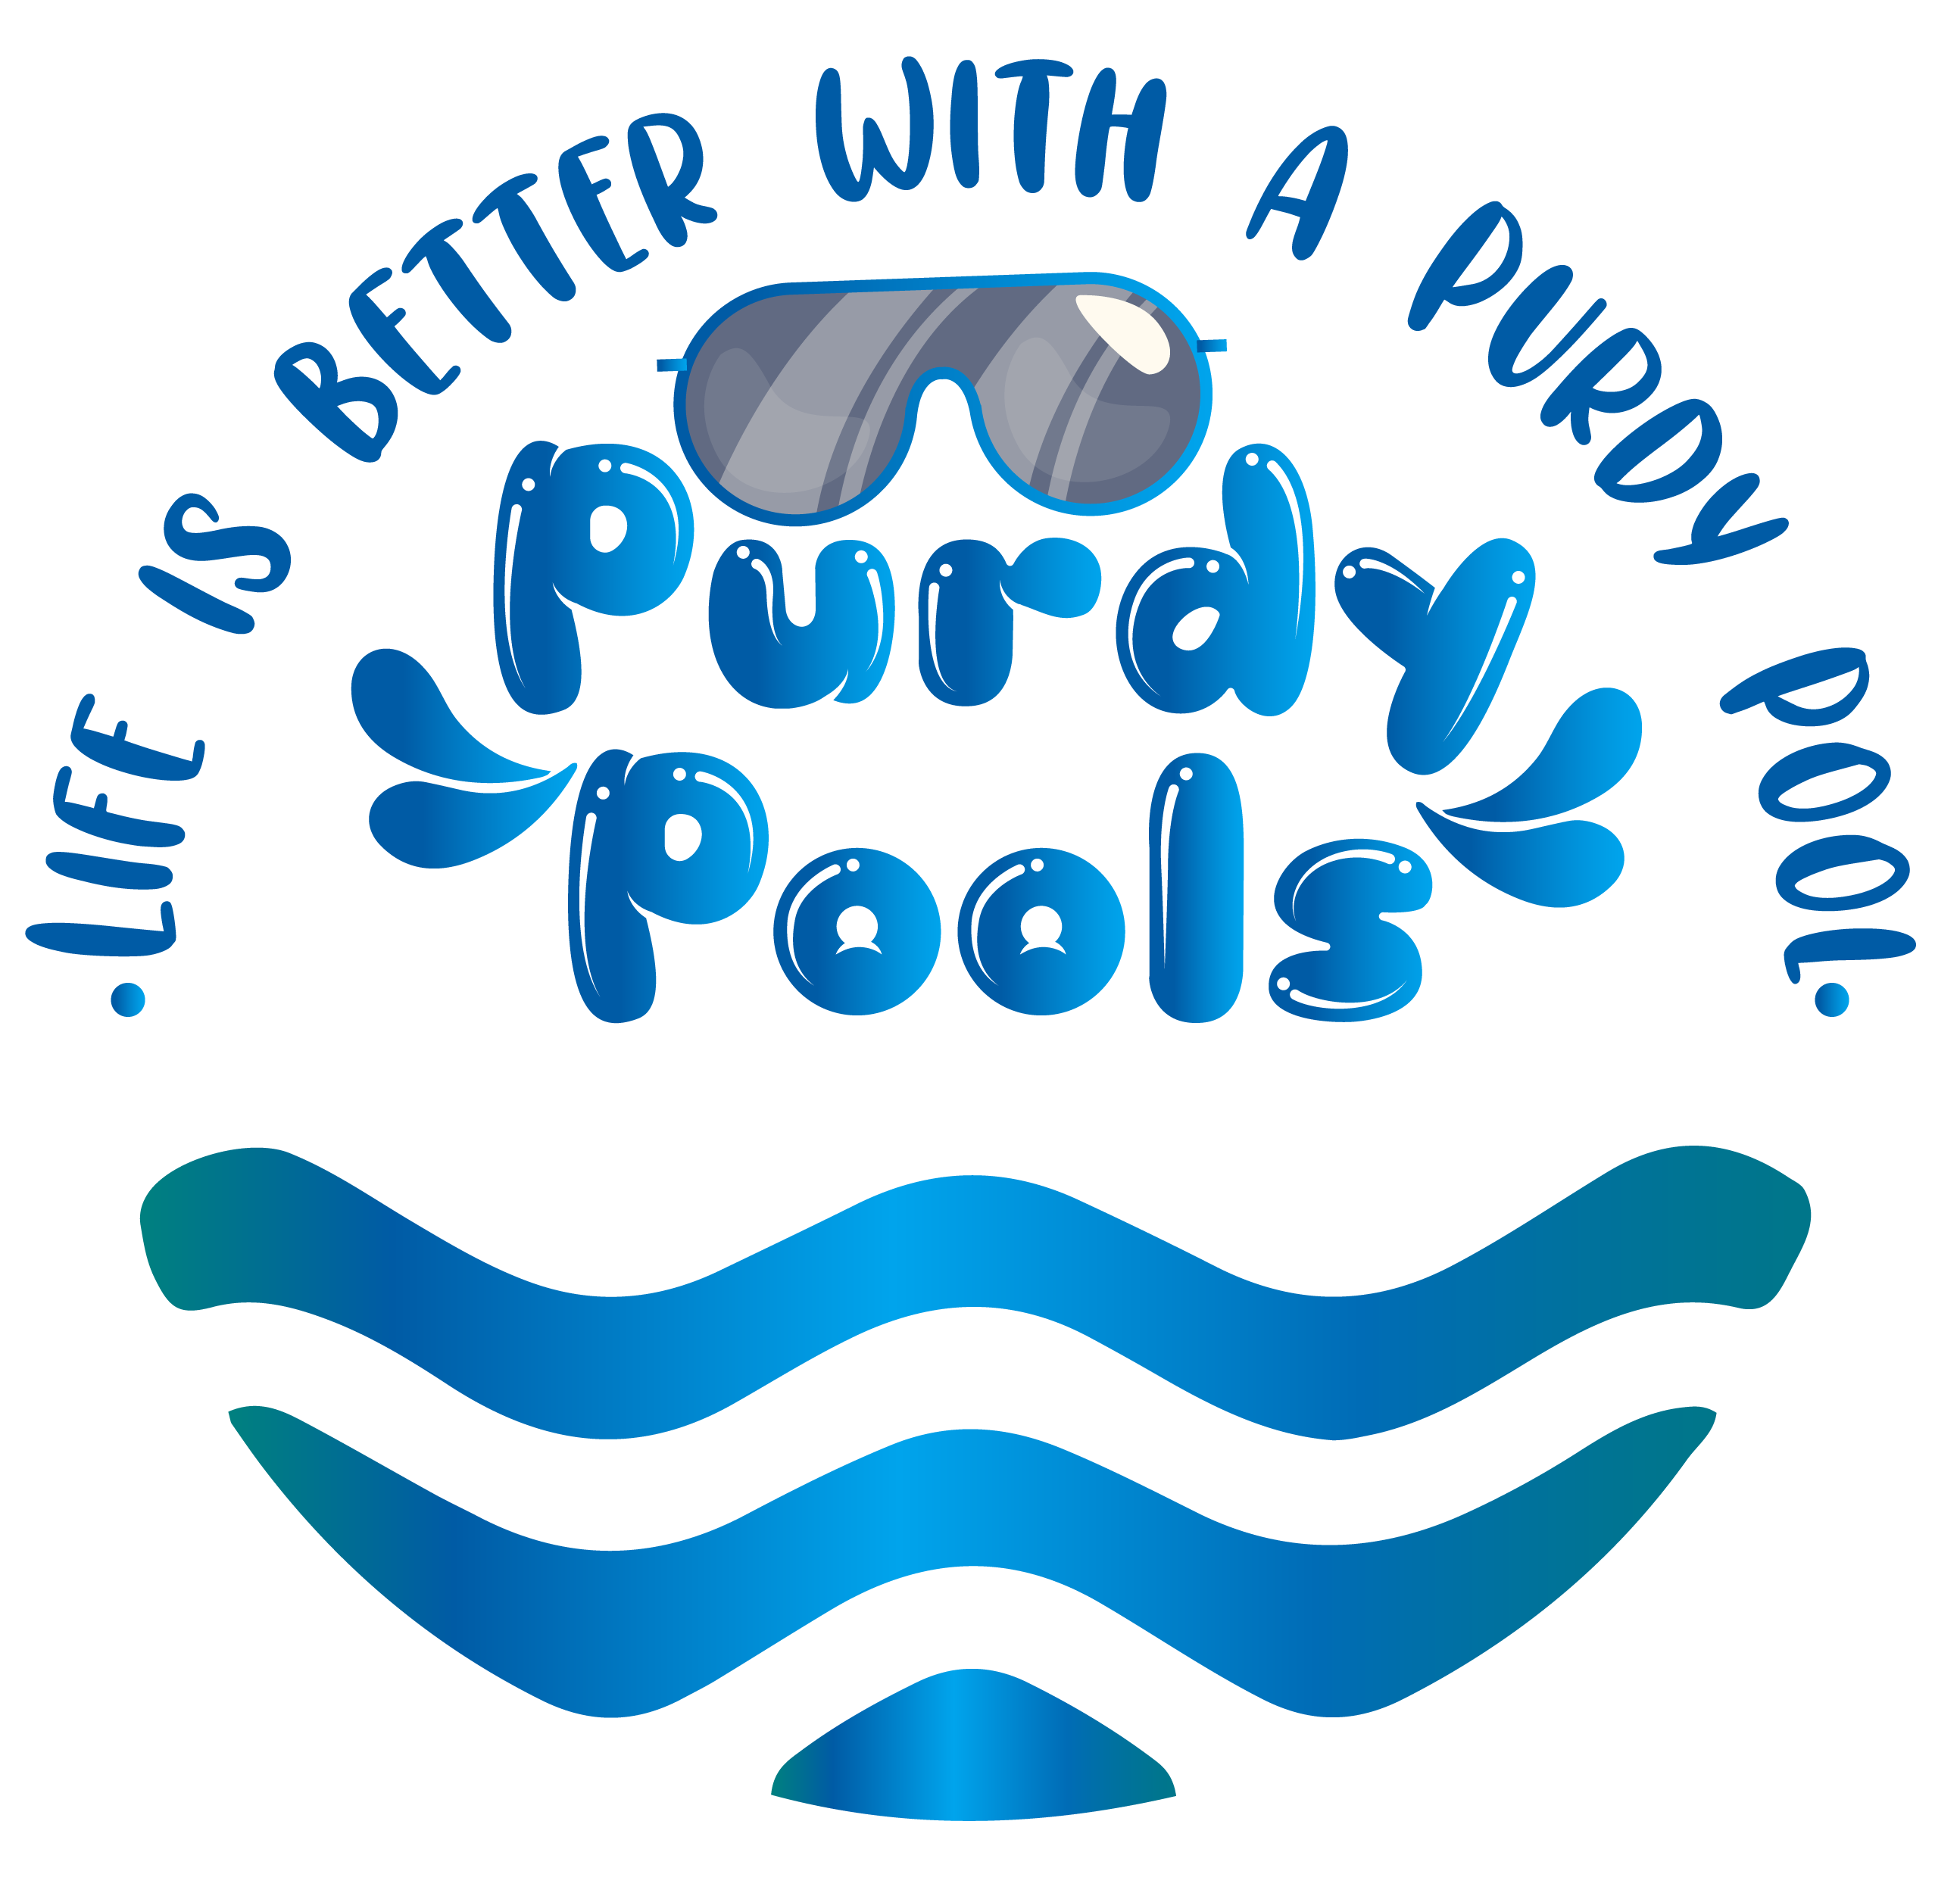 Purdy Pool Service & Repair 